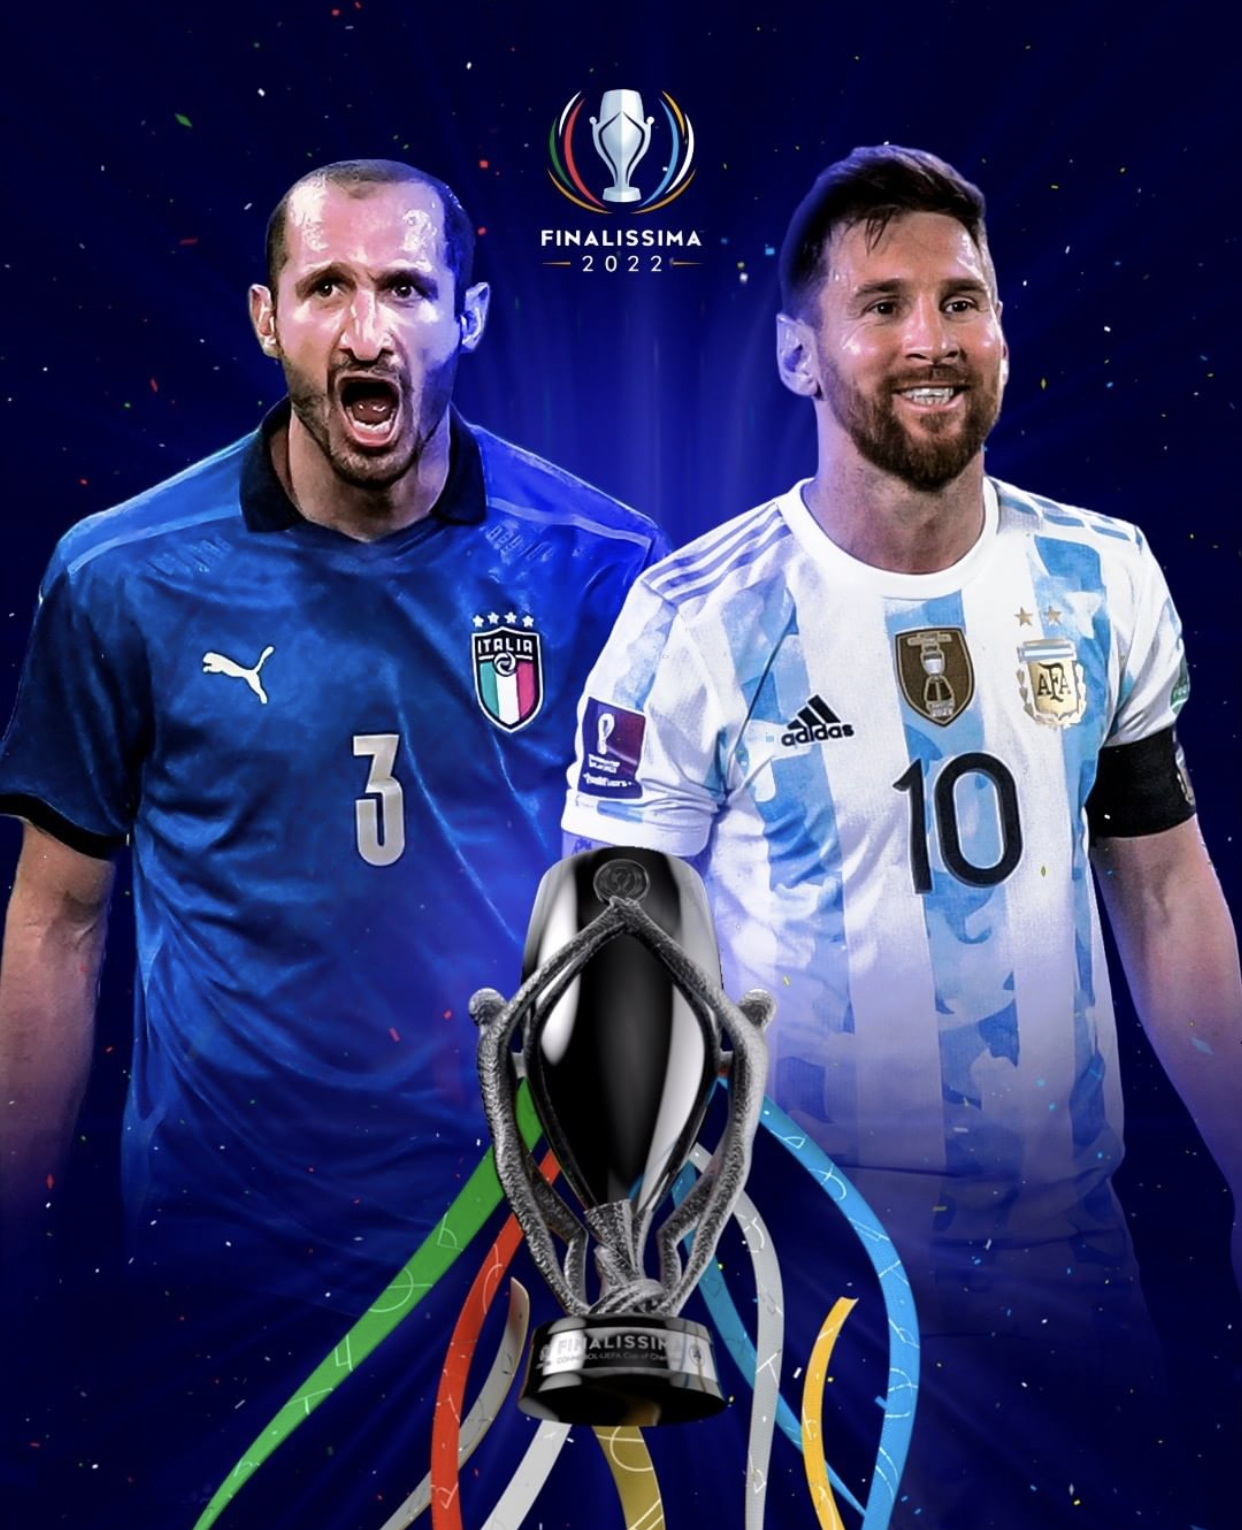 Finalissima 2022 – Italy vs. Argentina